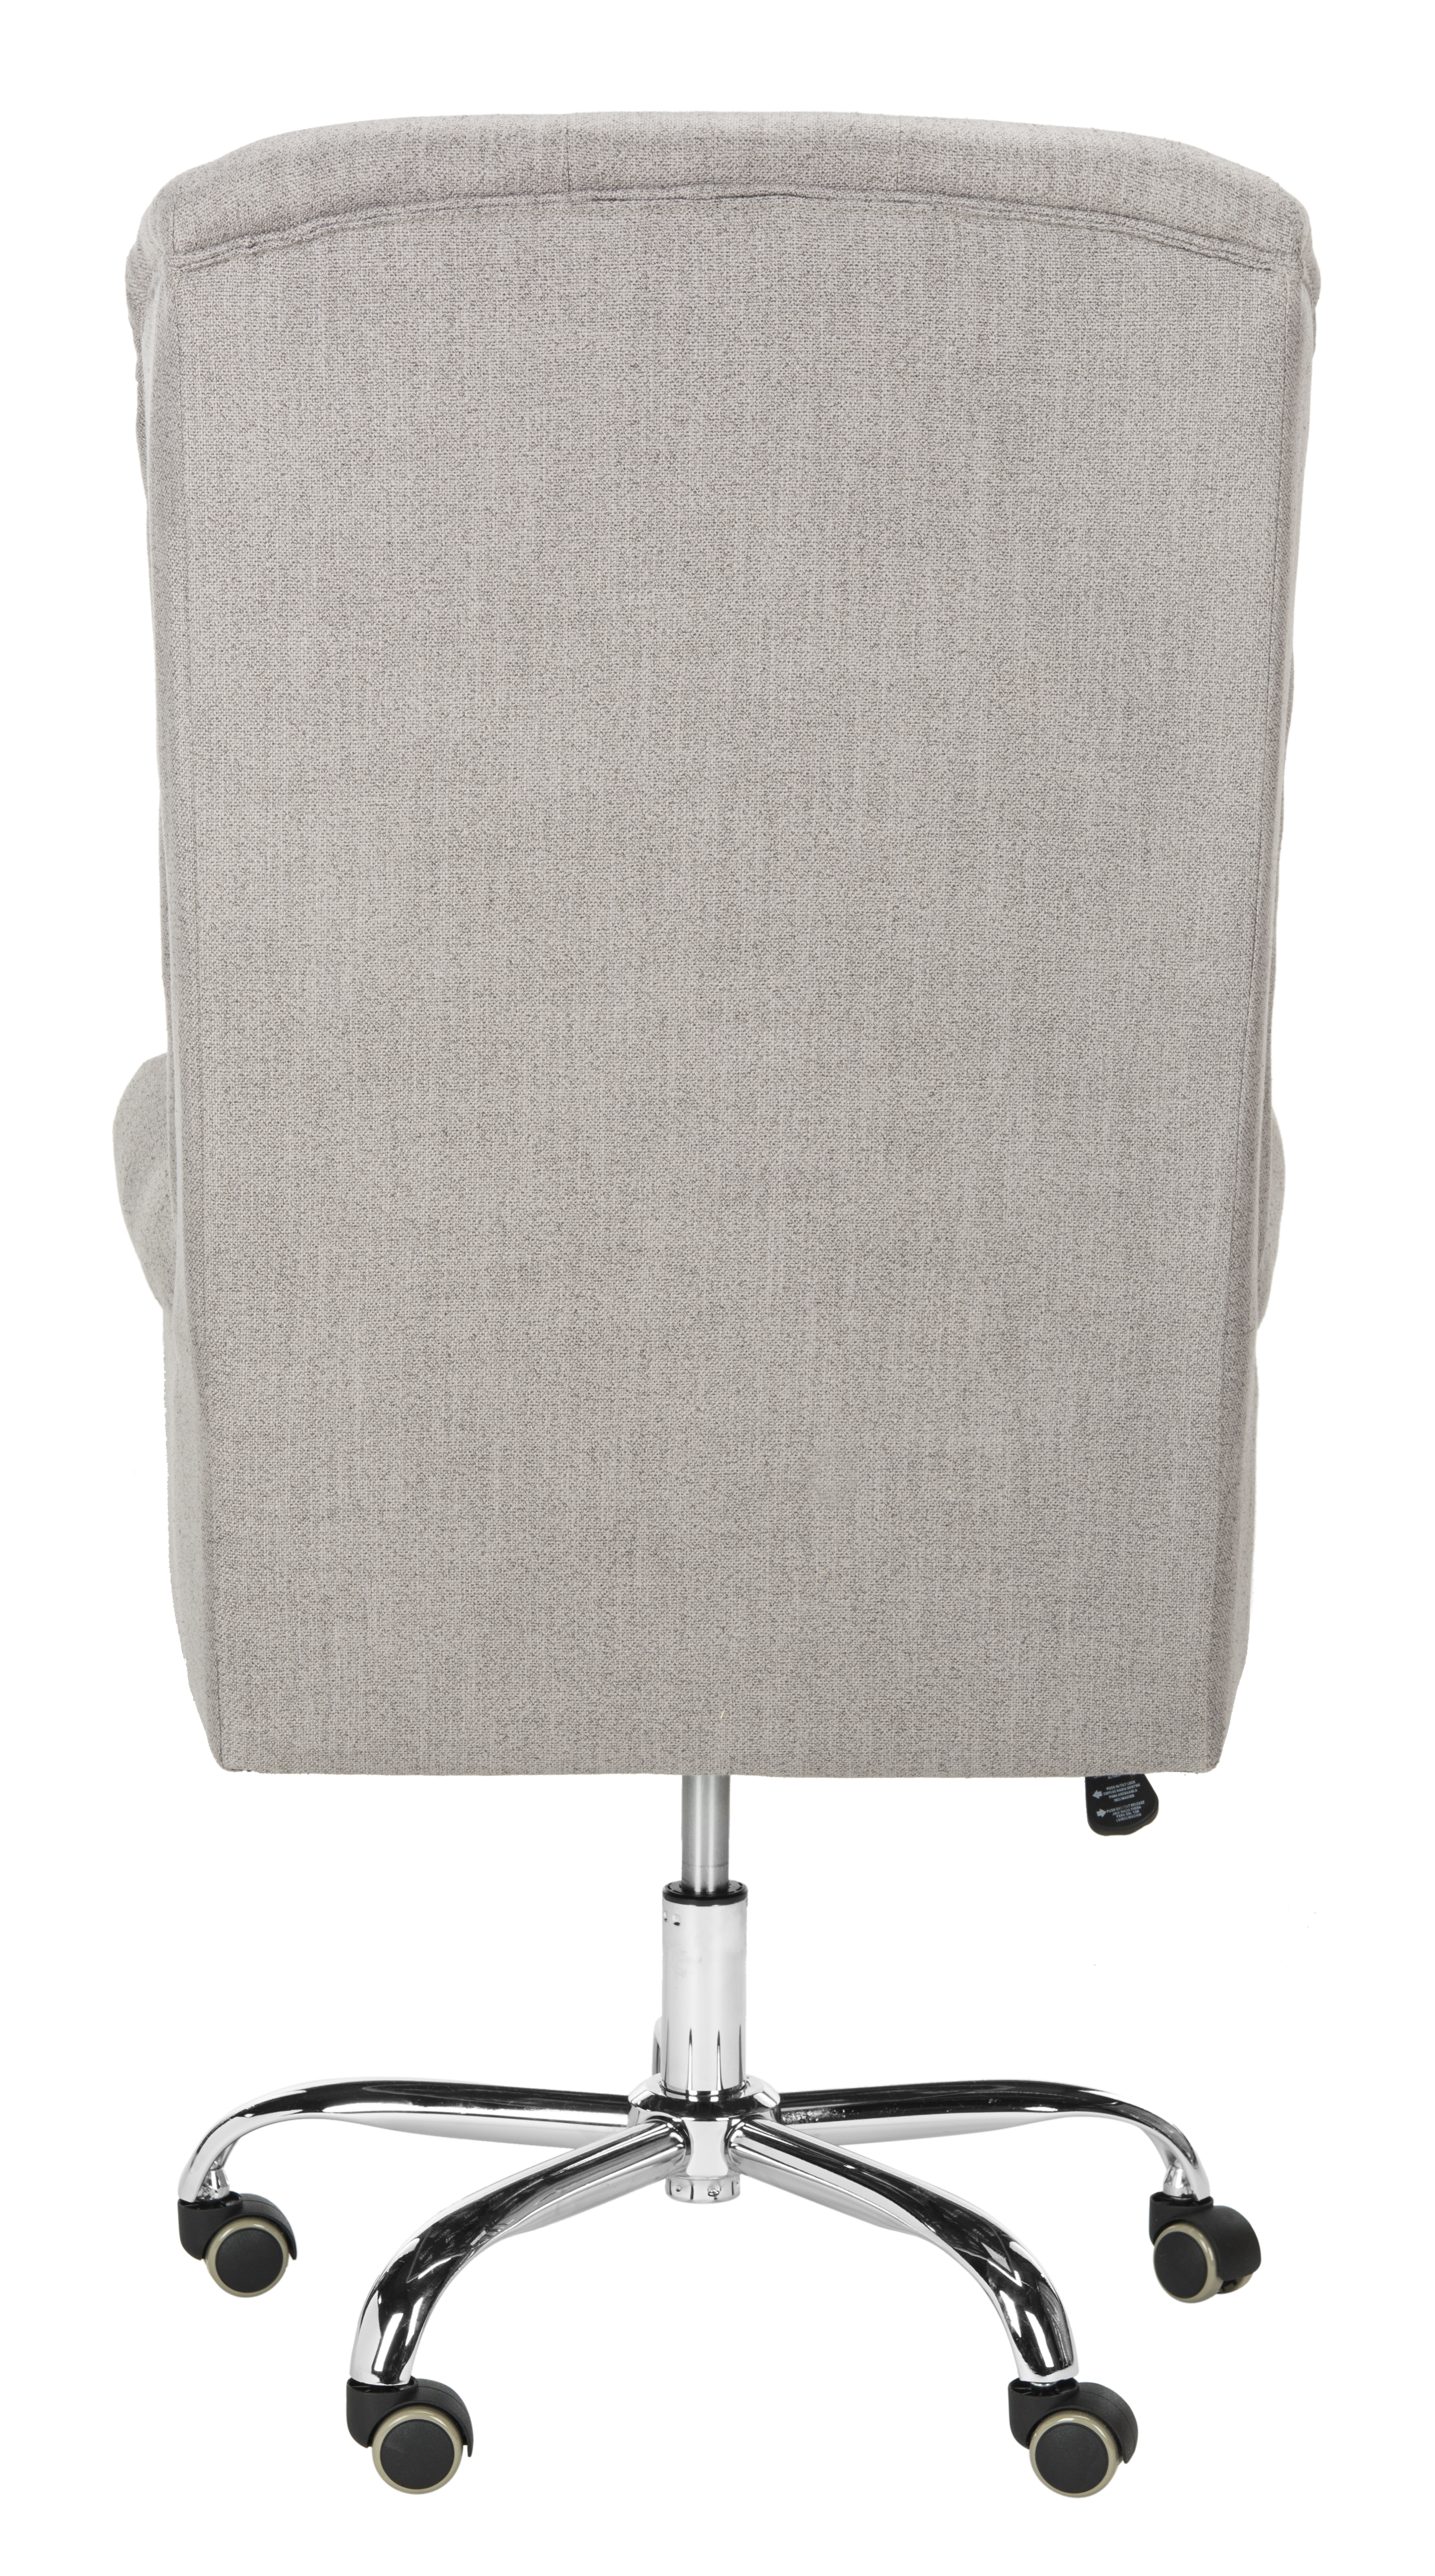 Ian Linen Chrome Leg Swivel Office Chair - Grey/Chrome - Arlo Home - Image 3